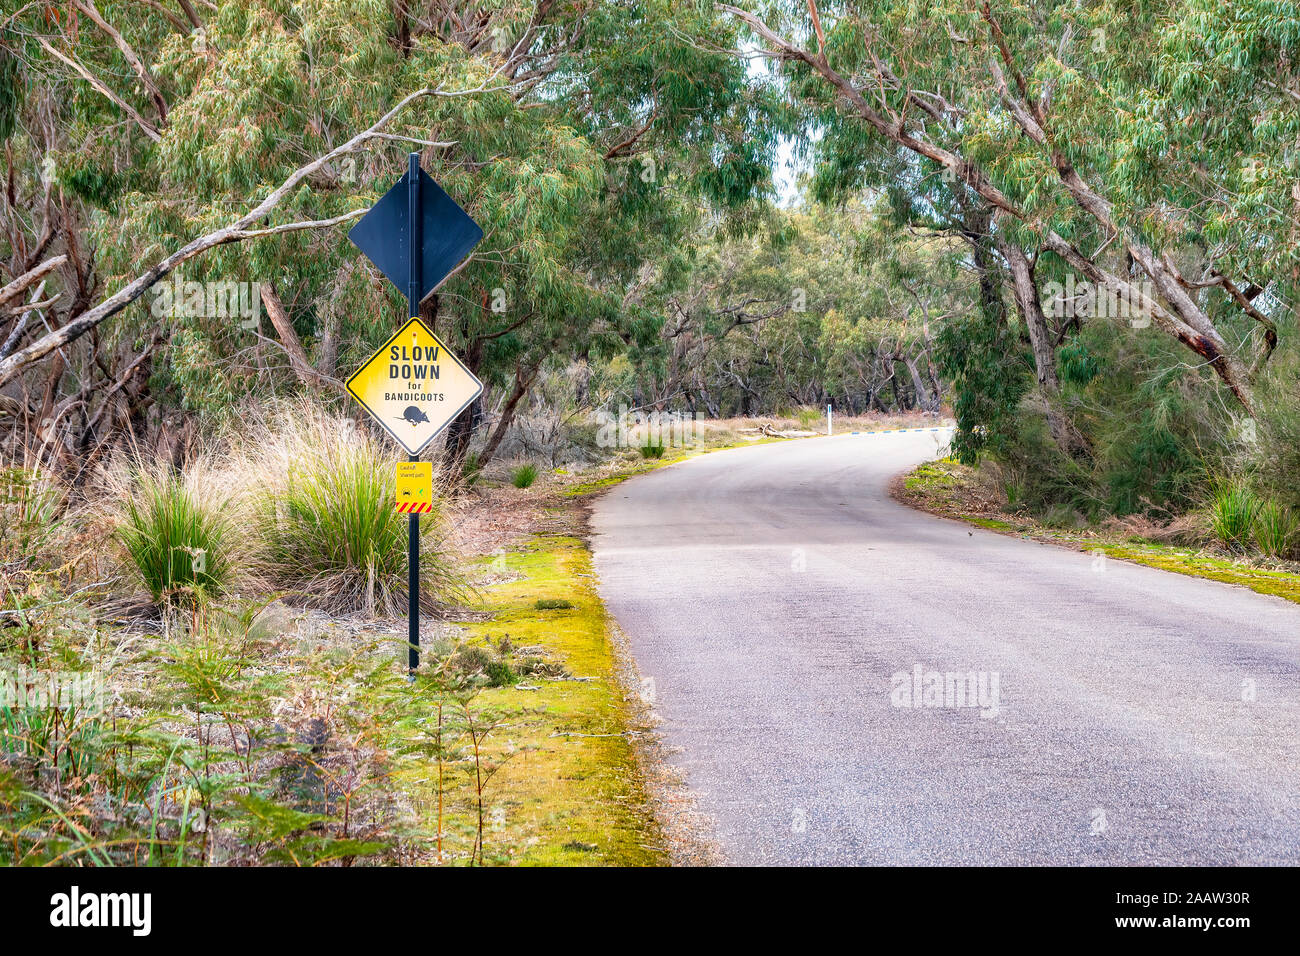 Signo de cruce Bandicoots por carretera en medio de árboles, Victoria, Australia Foto de stock